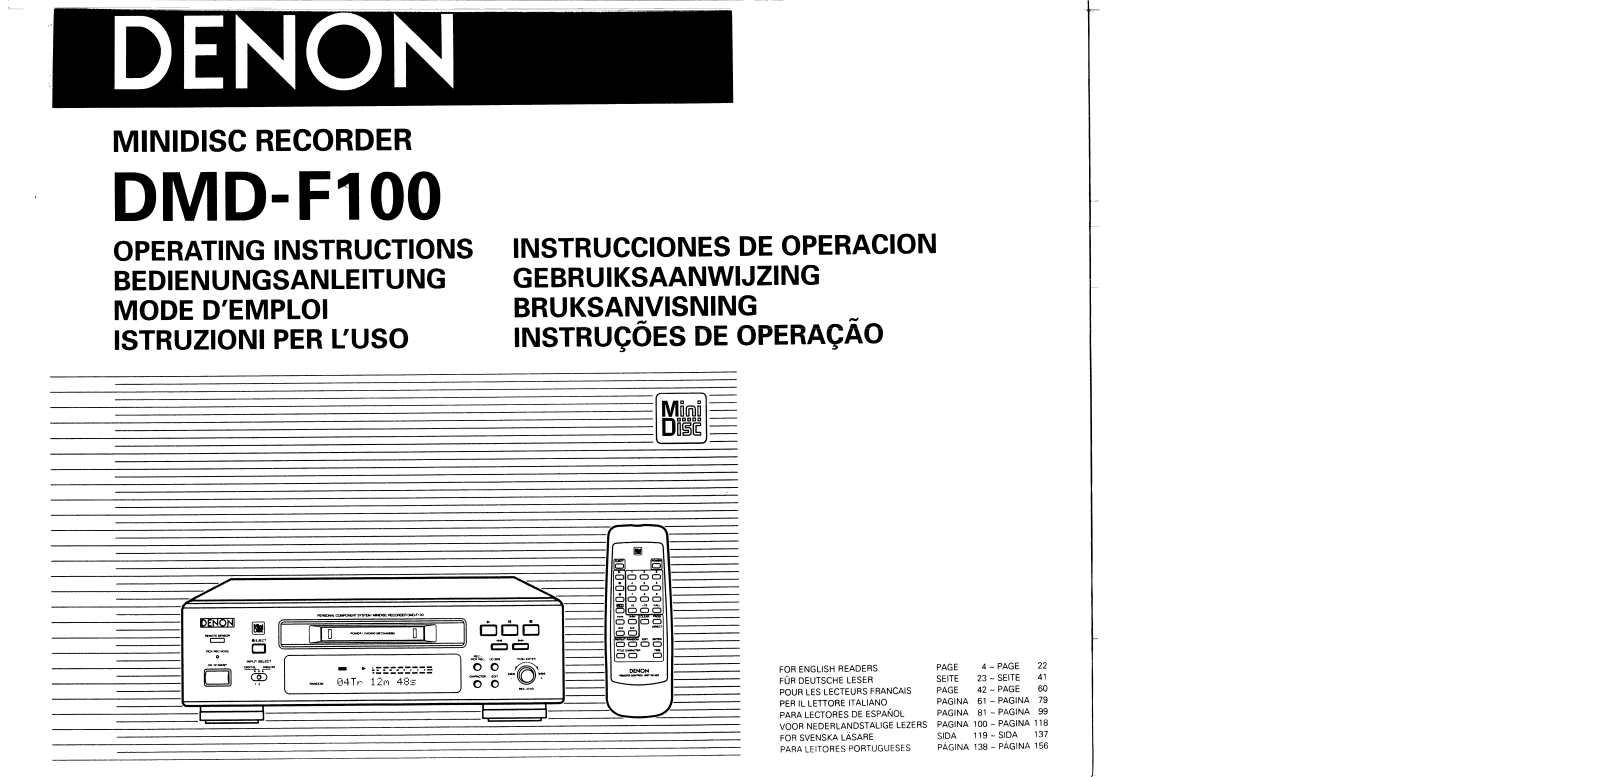 Denon DMD-F100 Owner's Manual